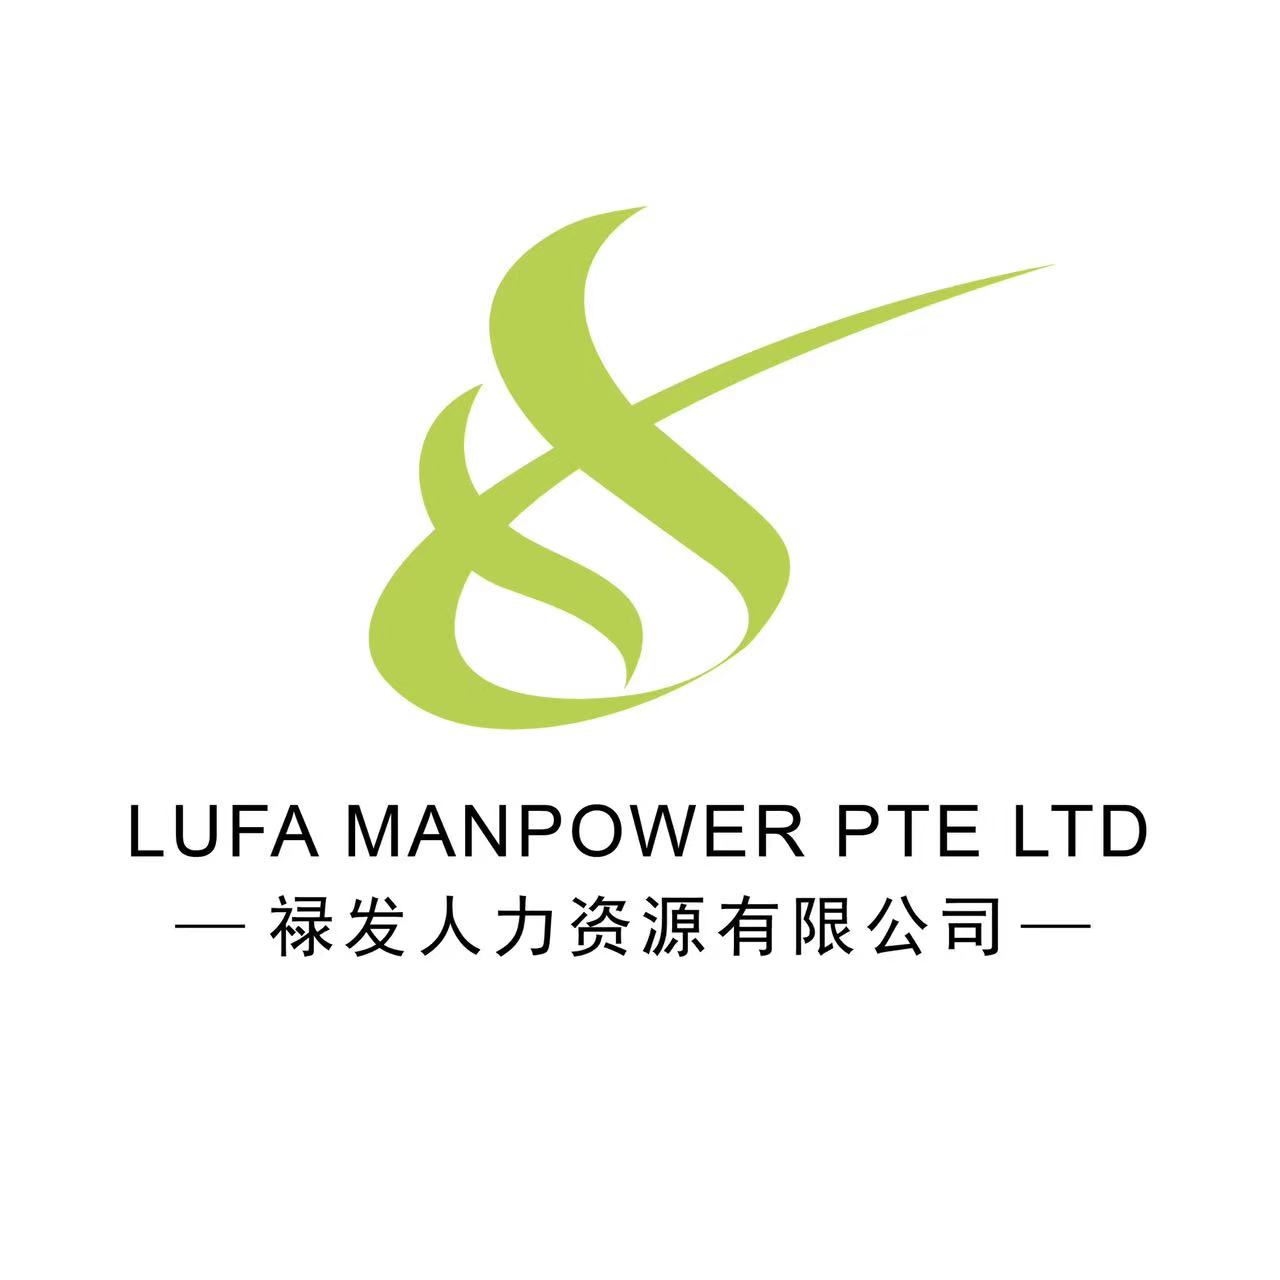 Lufa Manpower Pte. Ltd. company logo